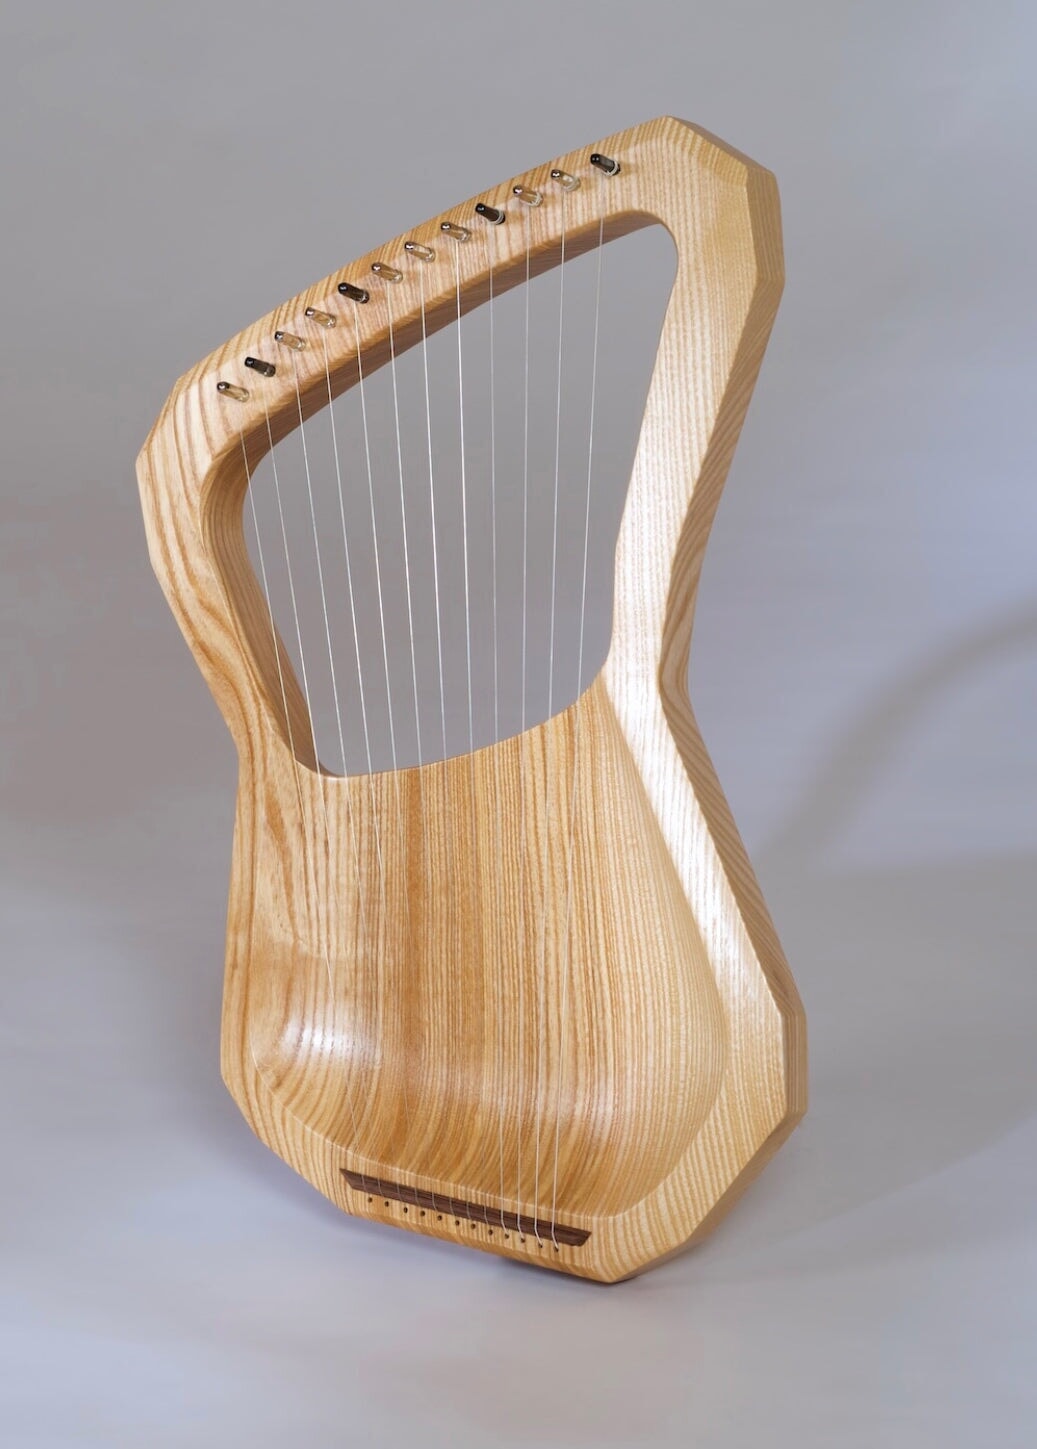 Choroi 12 String Childrens Lyre Ash Wood, Tunes to Pentatonic or Diatonic Lyre - Alder & Alouette